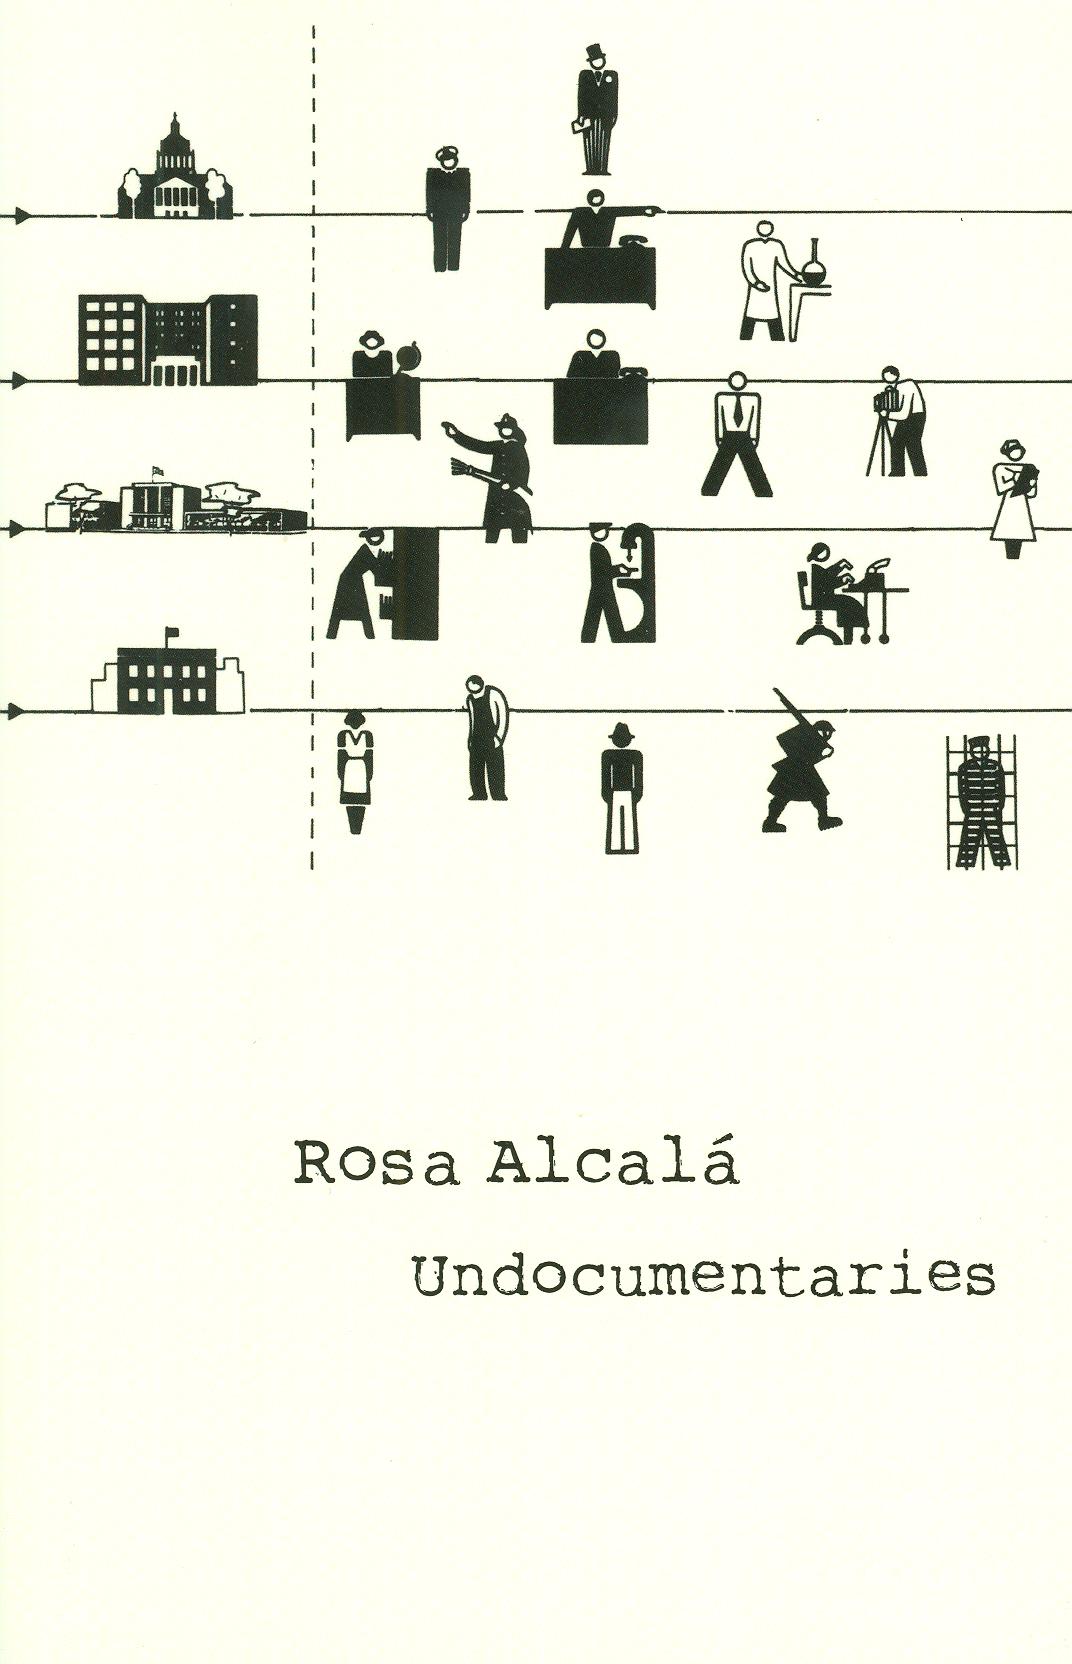 Rosa Alcala Undocumentaries